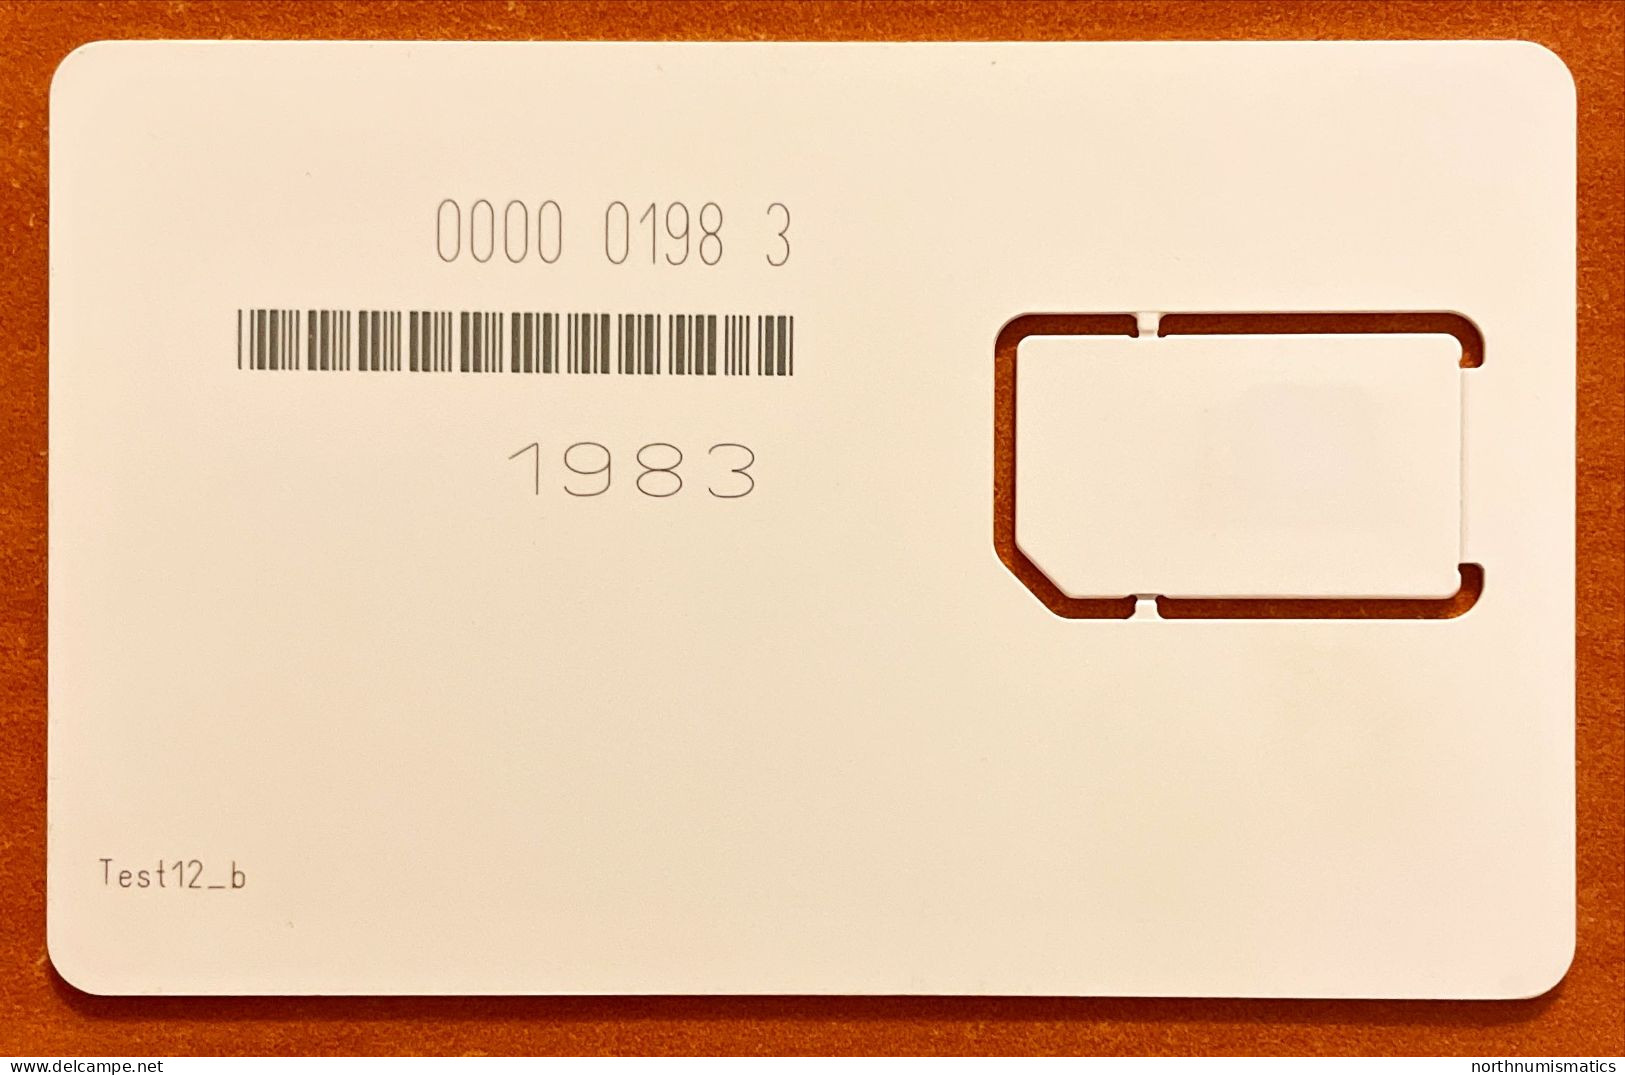 Gsm  Original Chip Sim Card Test12-b - Collections